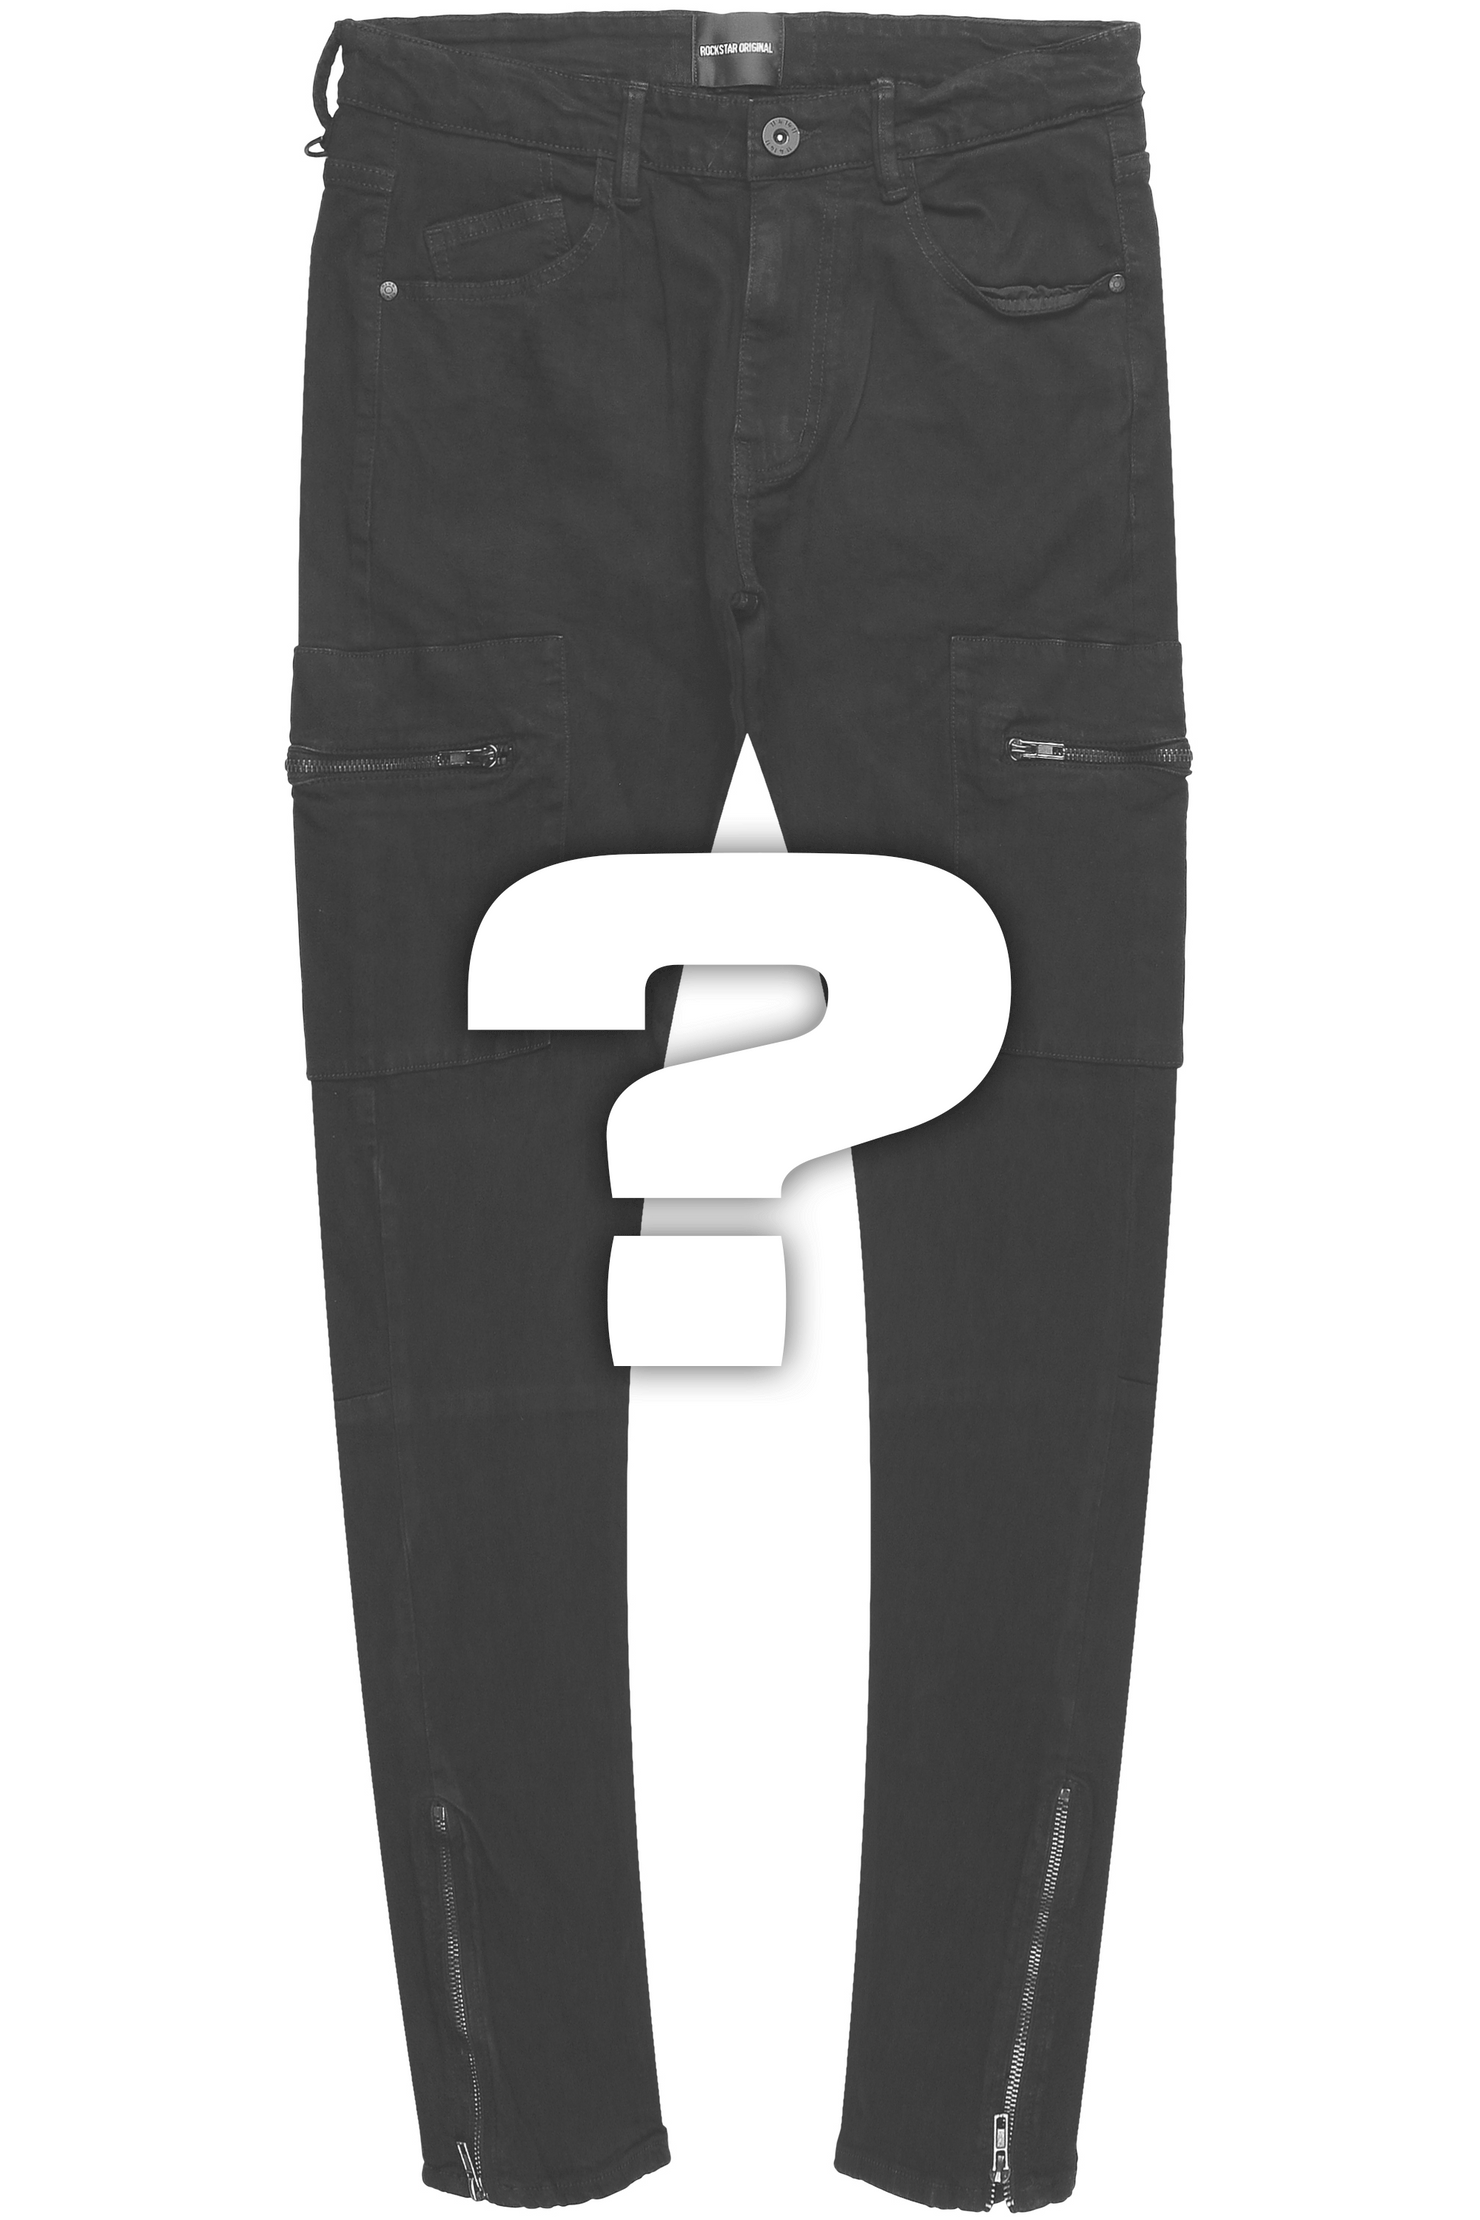 Rockstar original, Jeans, Mens Rockstar Jeans Size 38